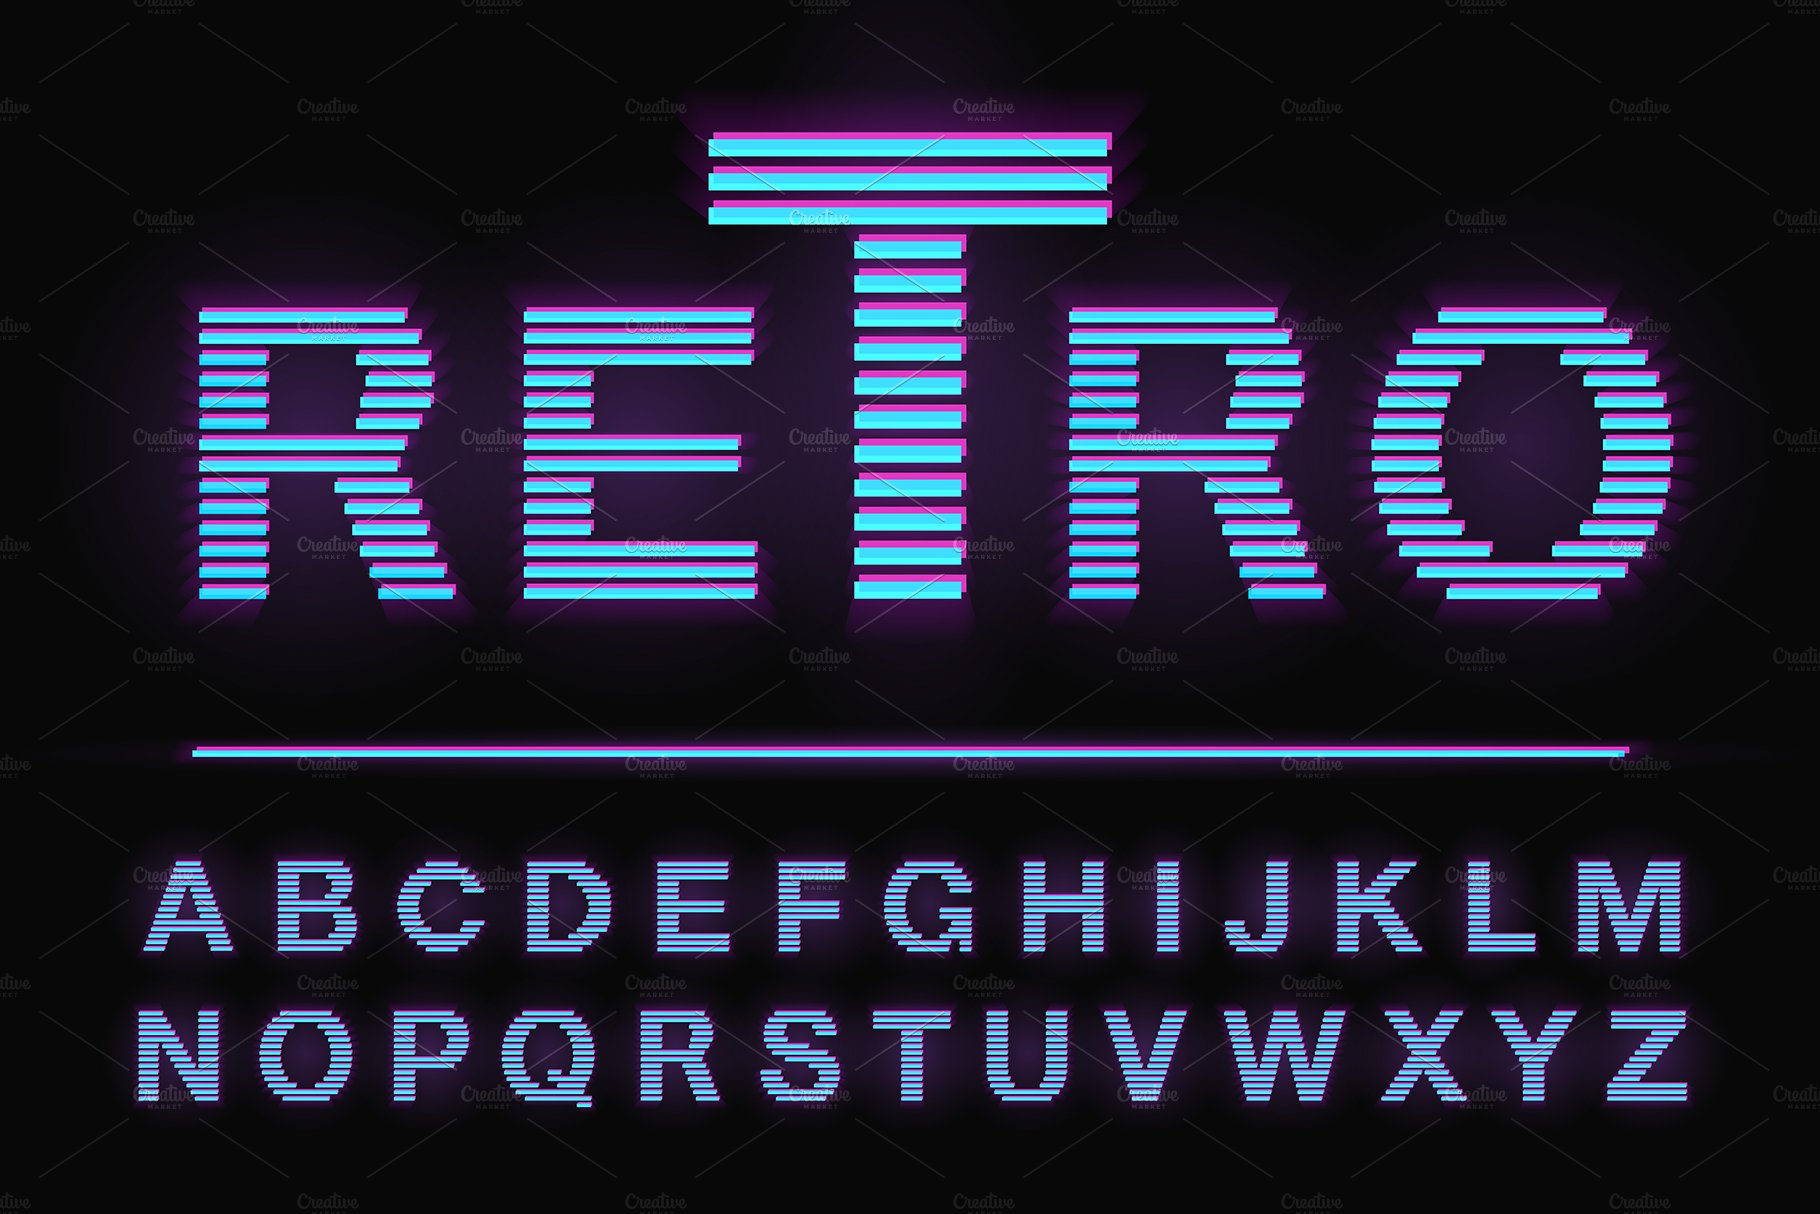 80's retro neon light style font cover image.